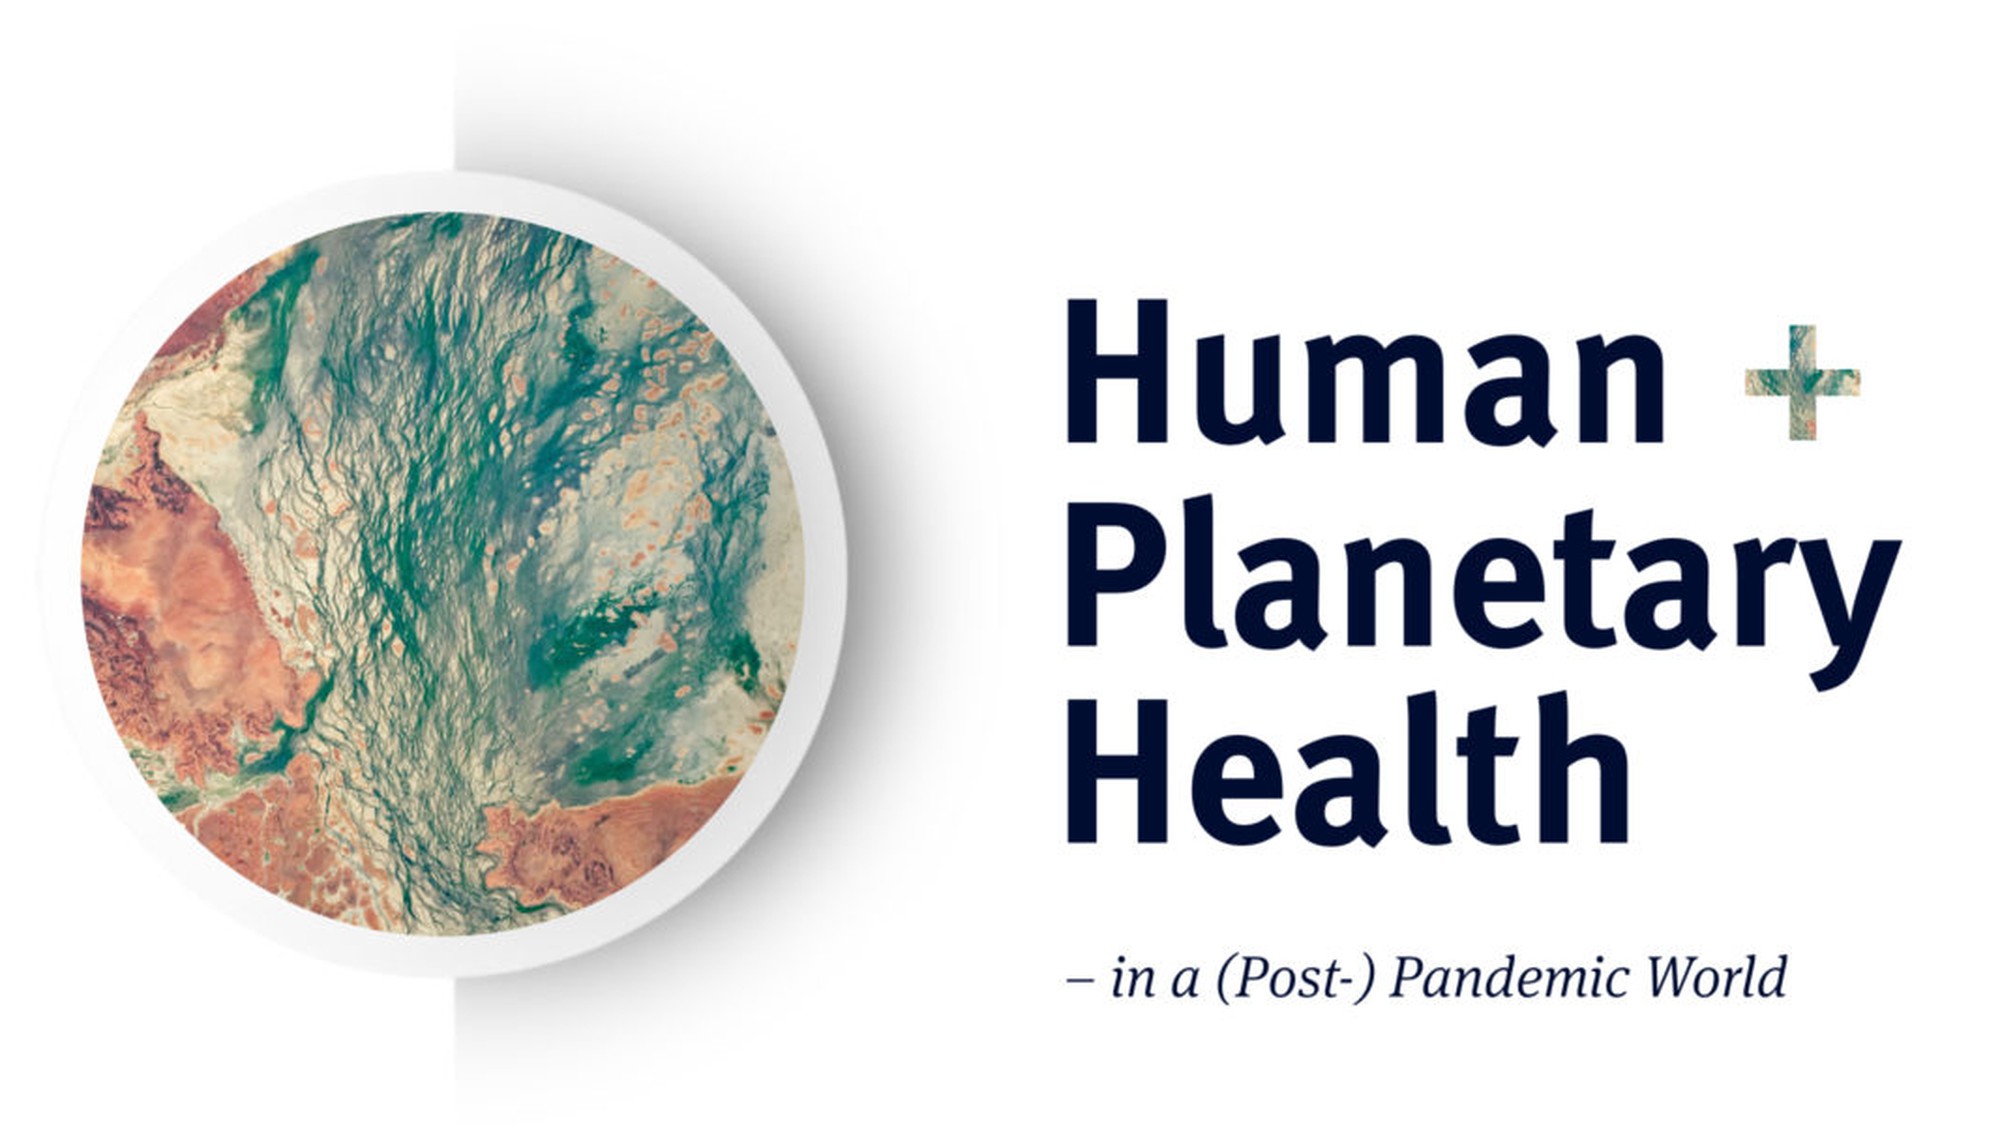 Human and Planetary Health (Copyright: Jean Menezes)